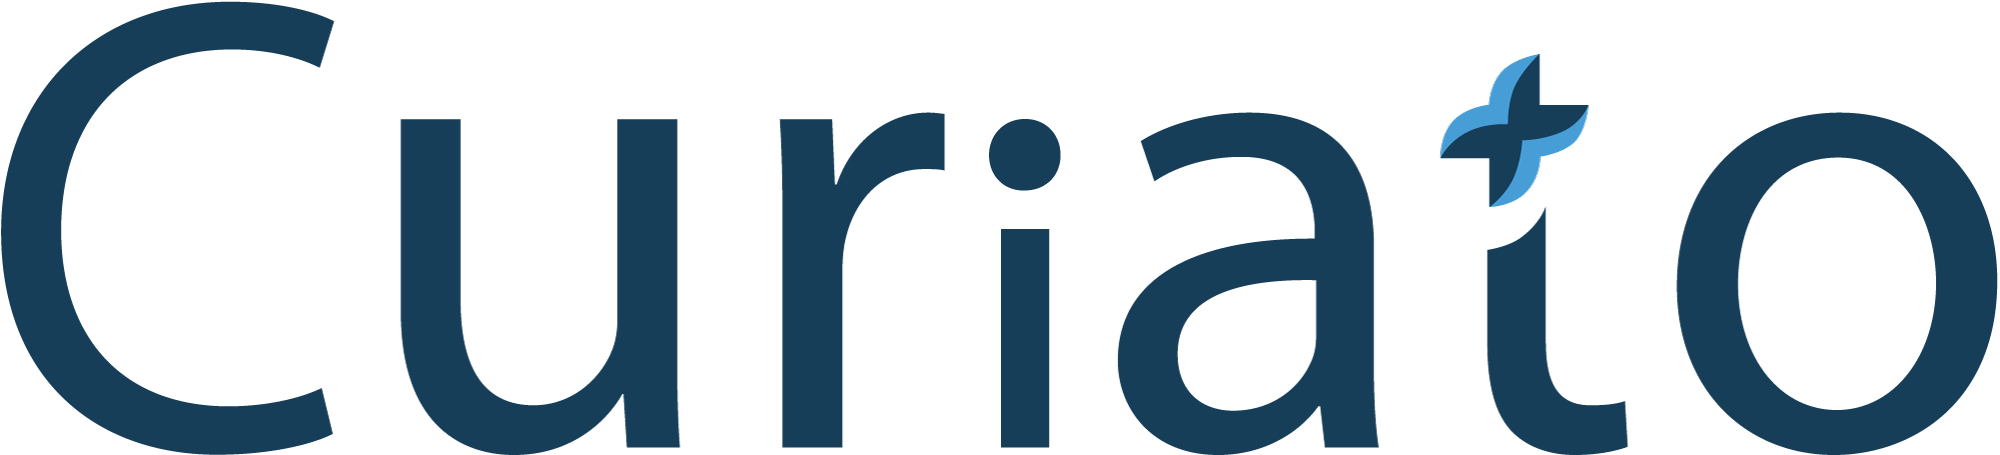 Curiato_Logo.png